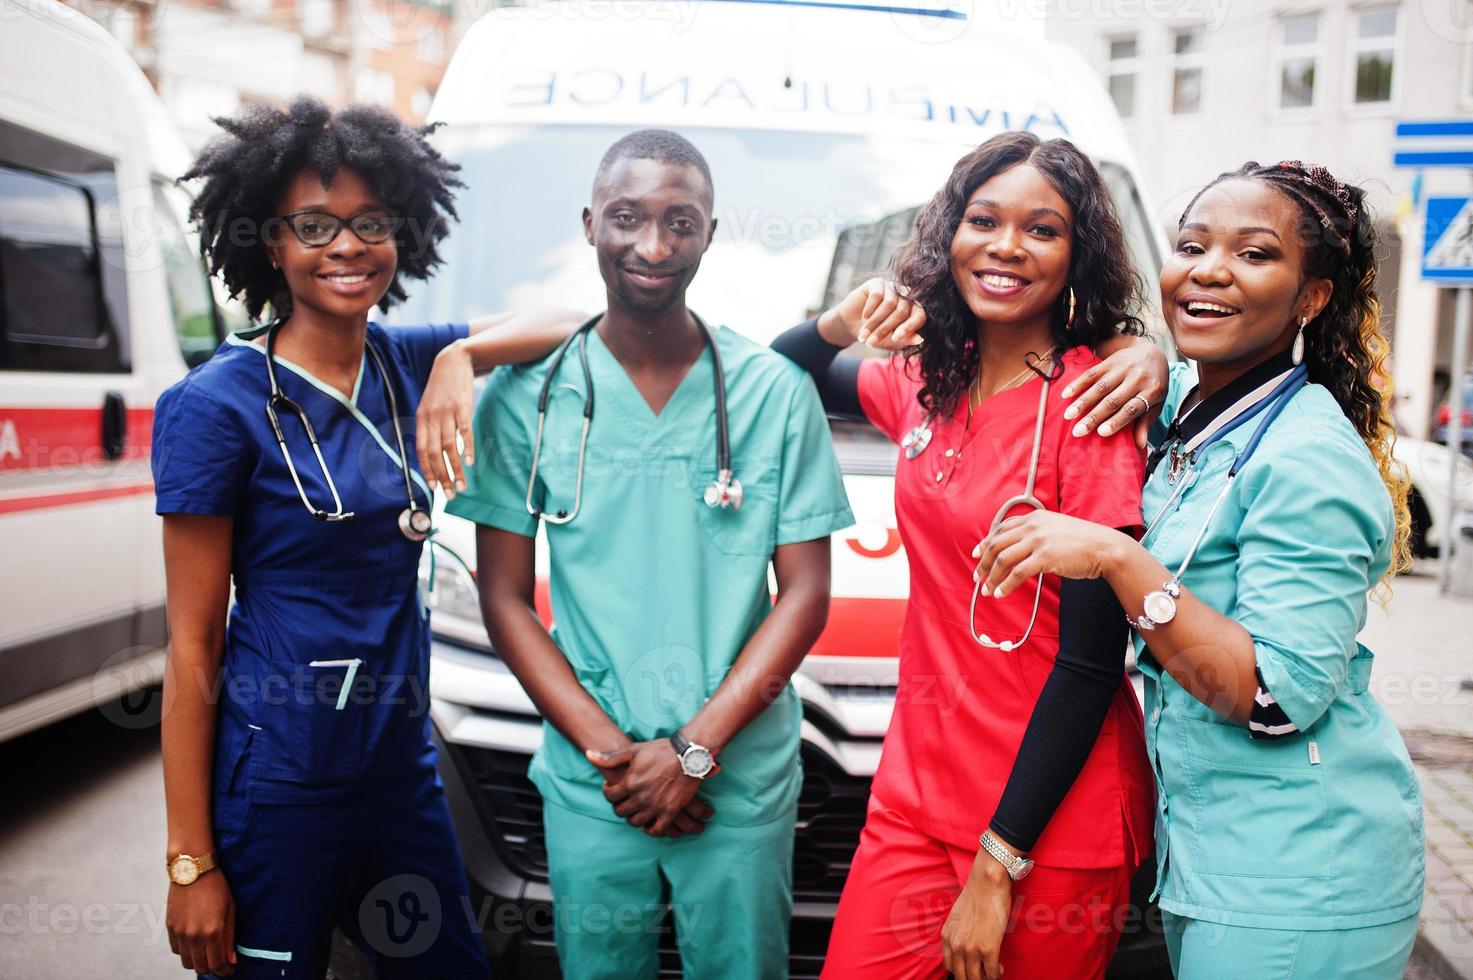 groep afrikaanse paramedische ambulance noodpersoneel artsen. foto